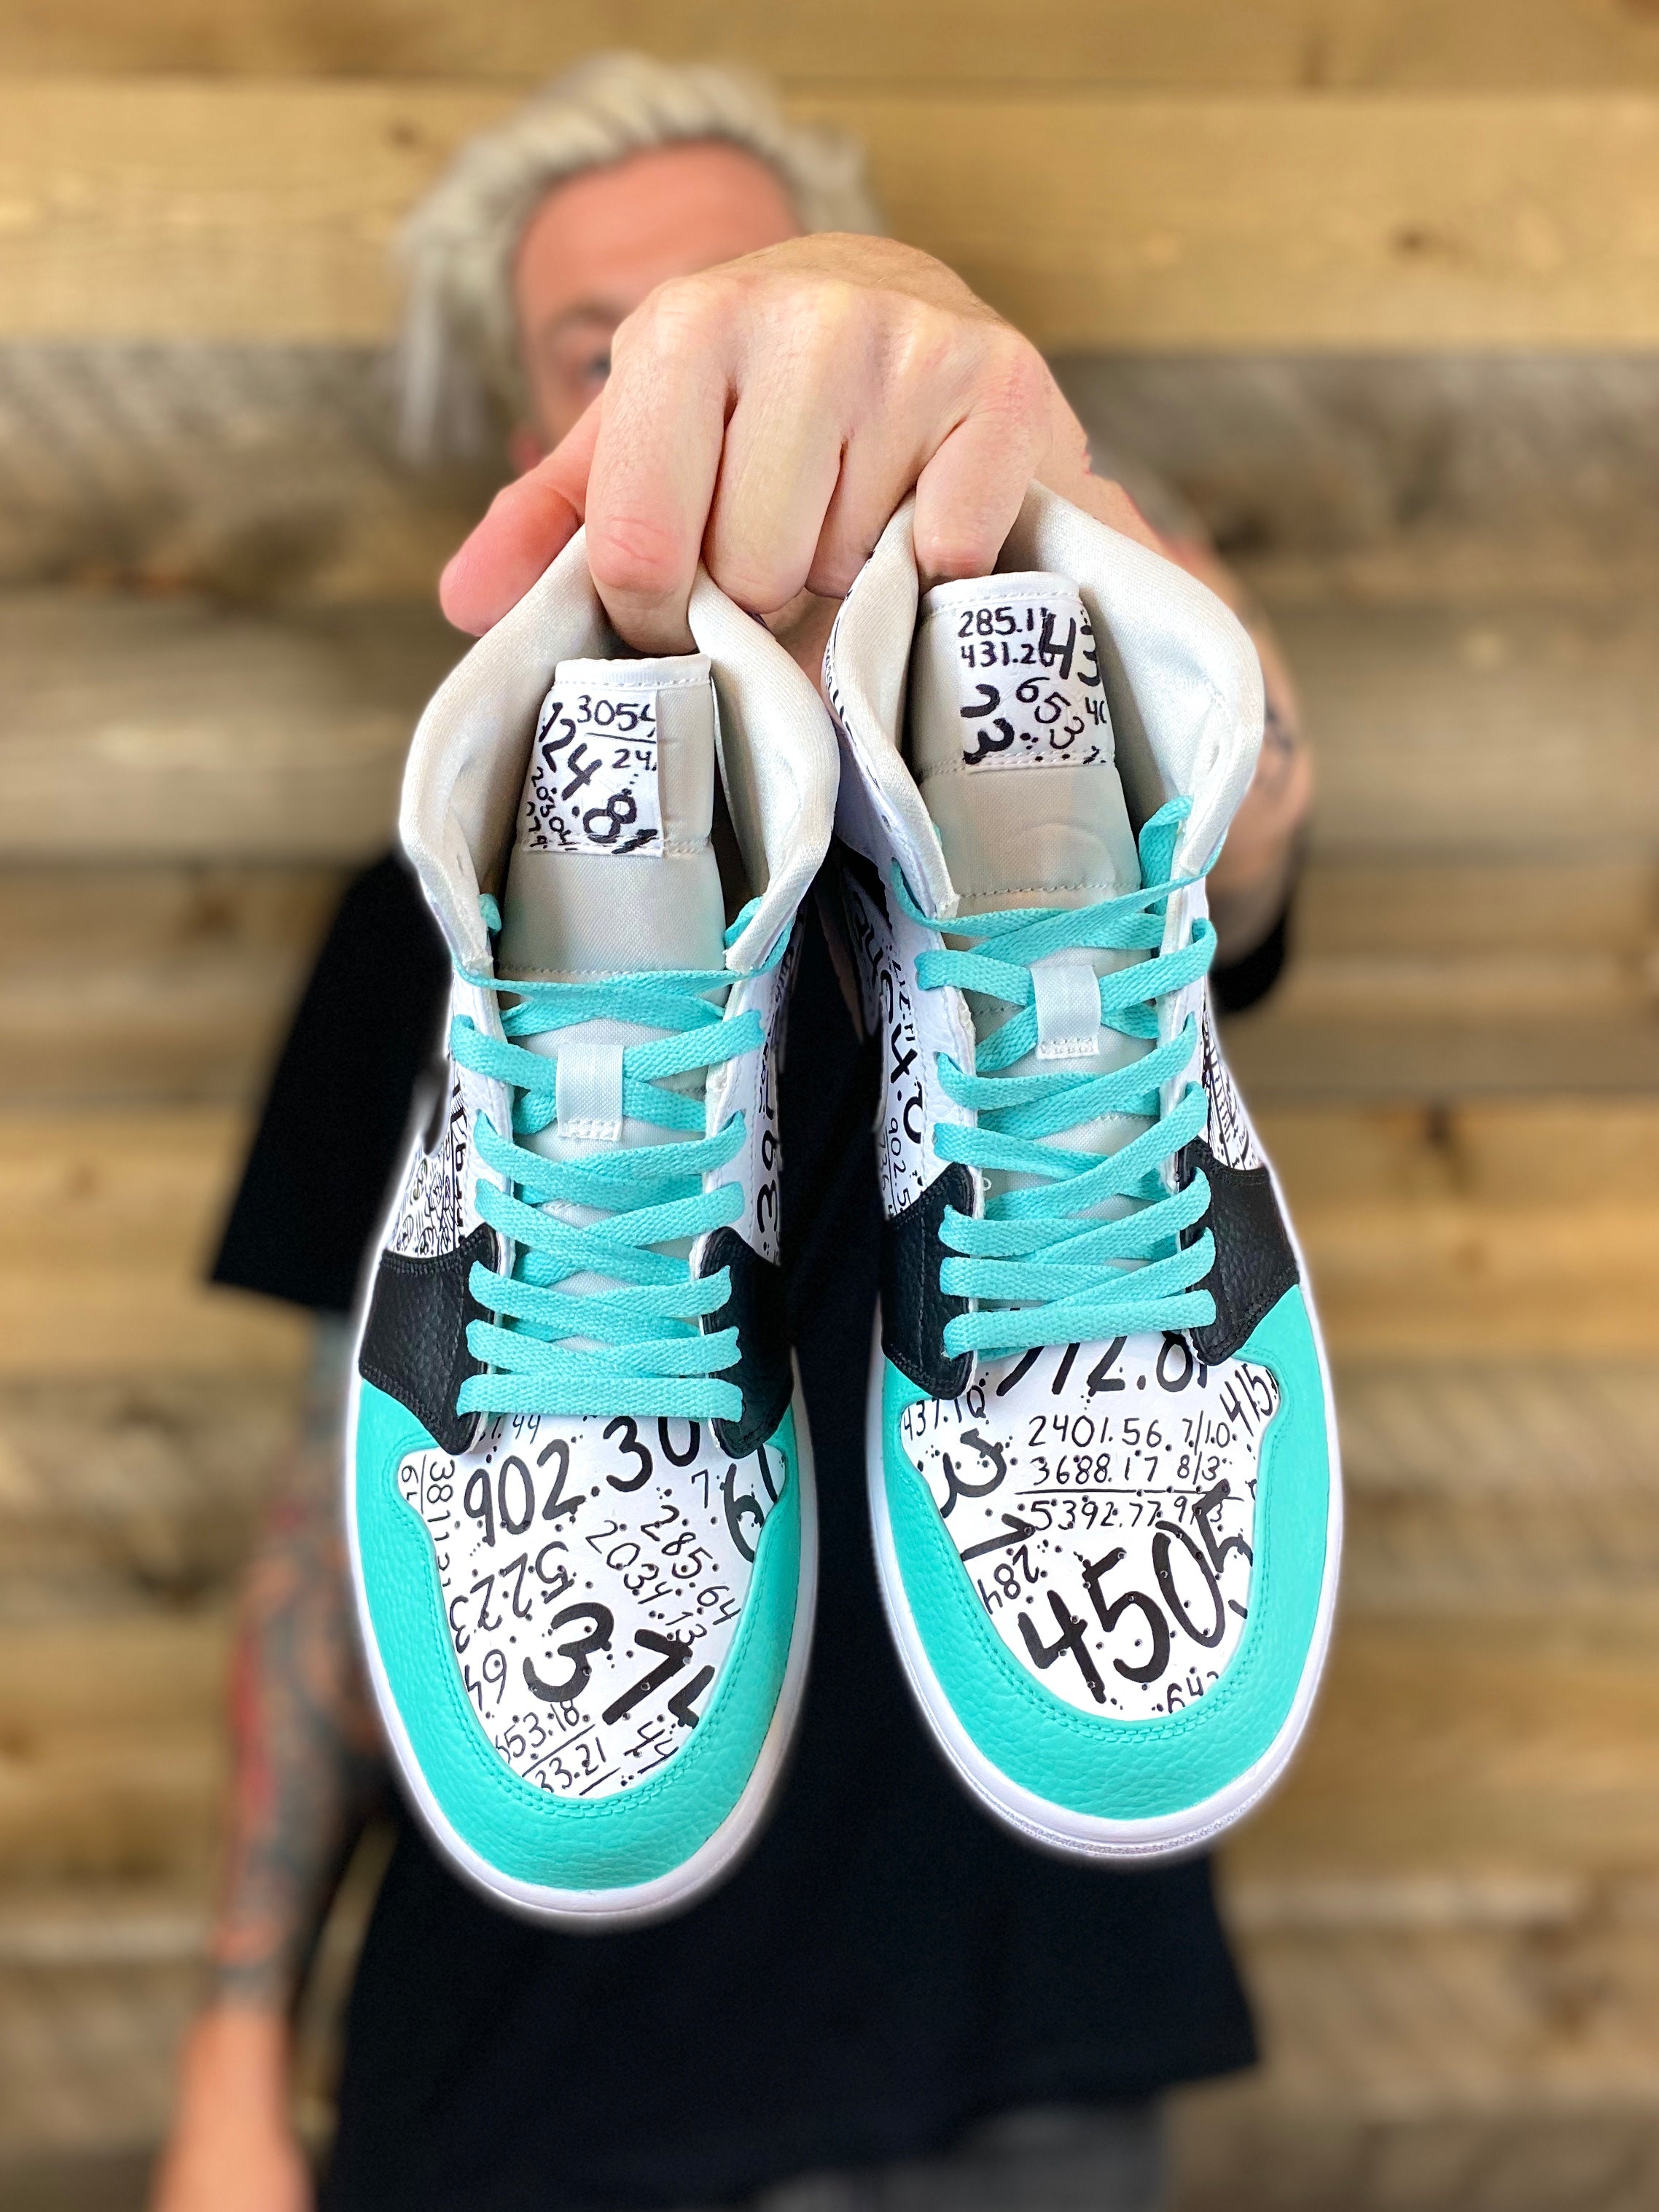 Run the Numbers - Nike Jordan shoes